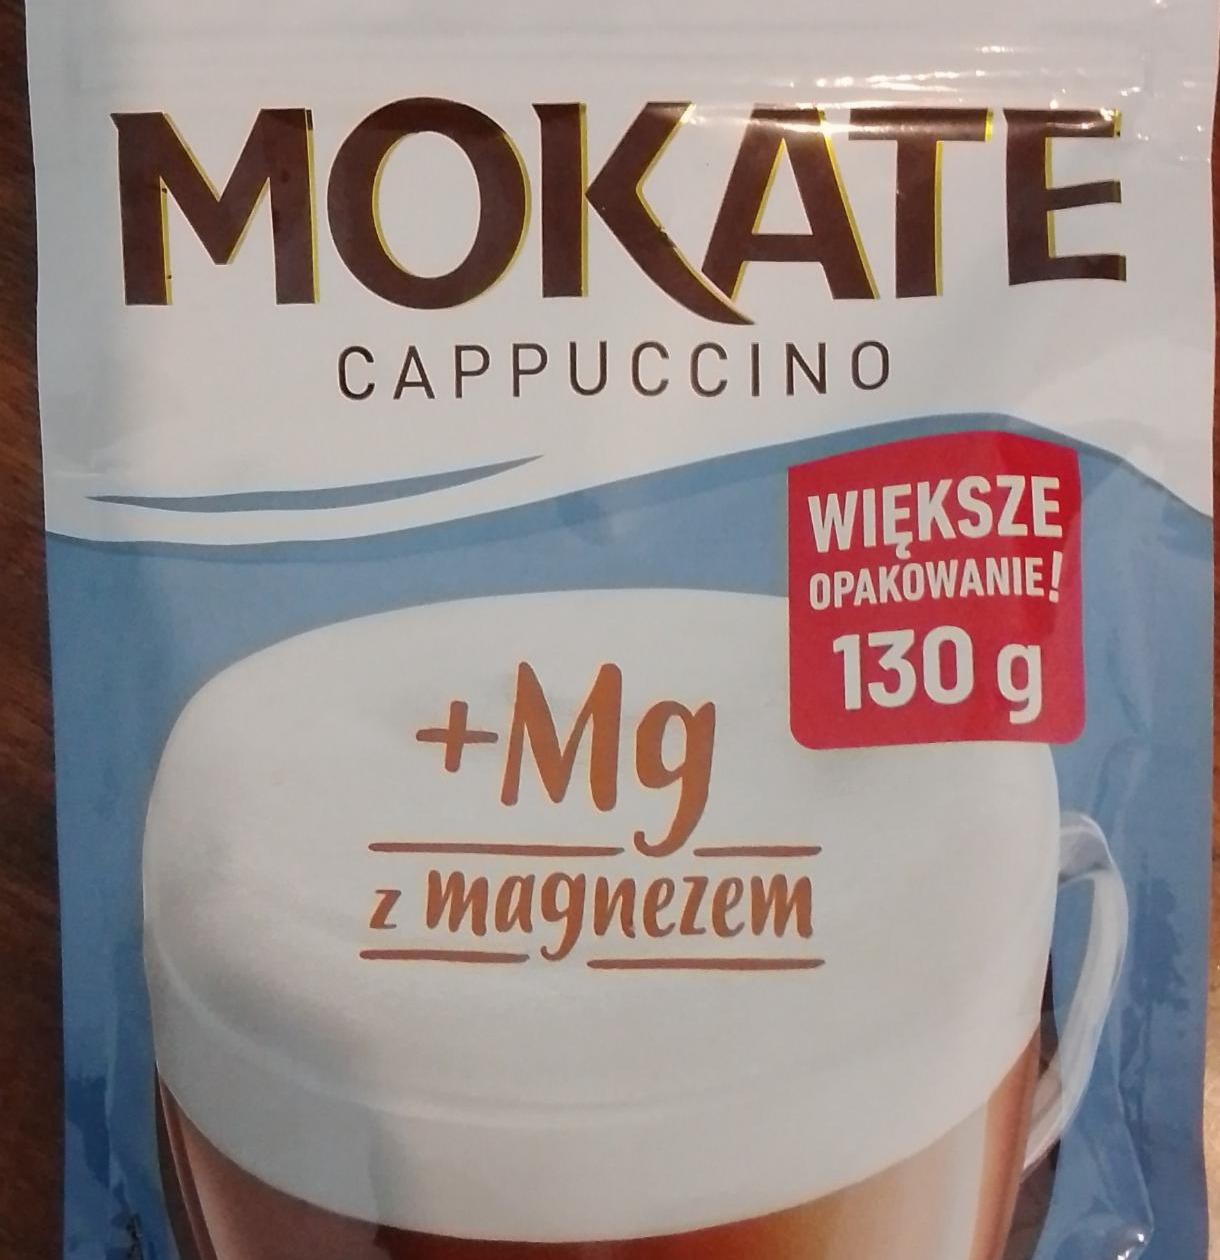 Фото - Mokate cappuccino z magnezem